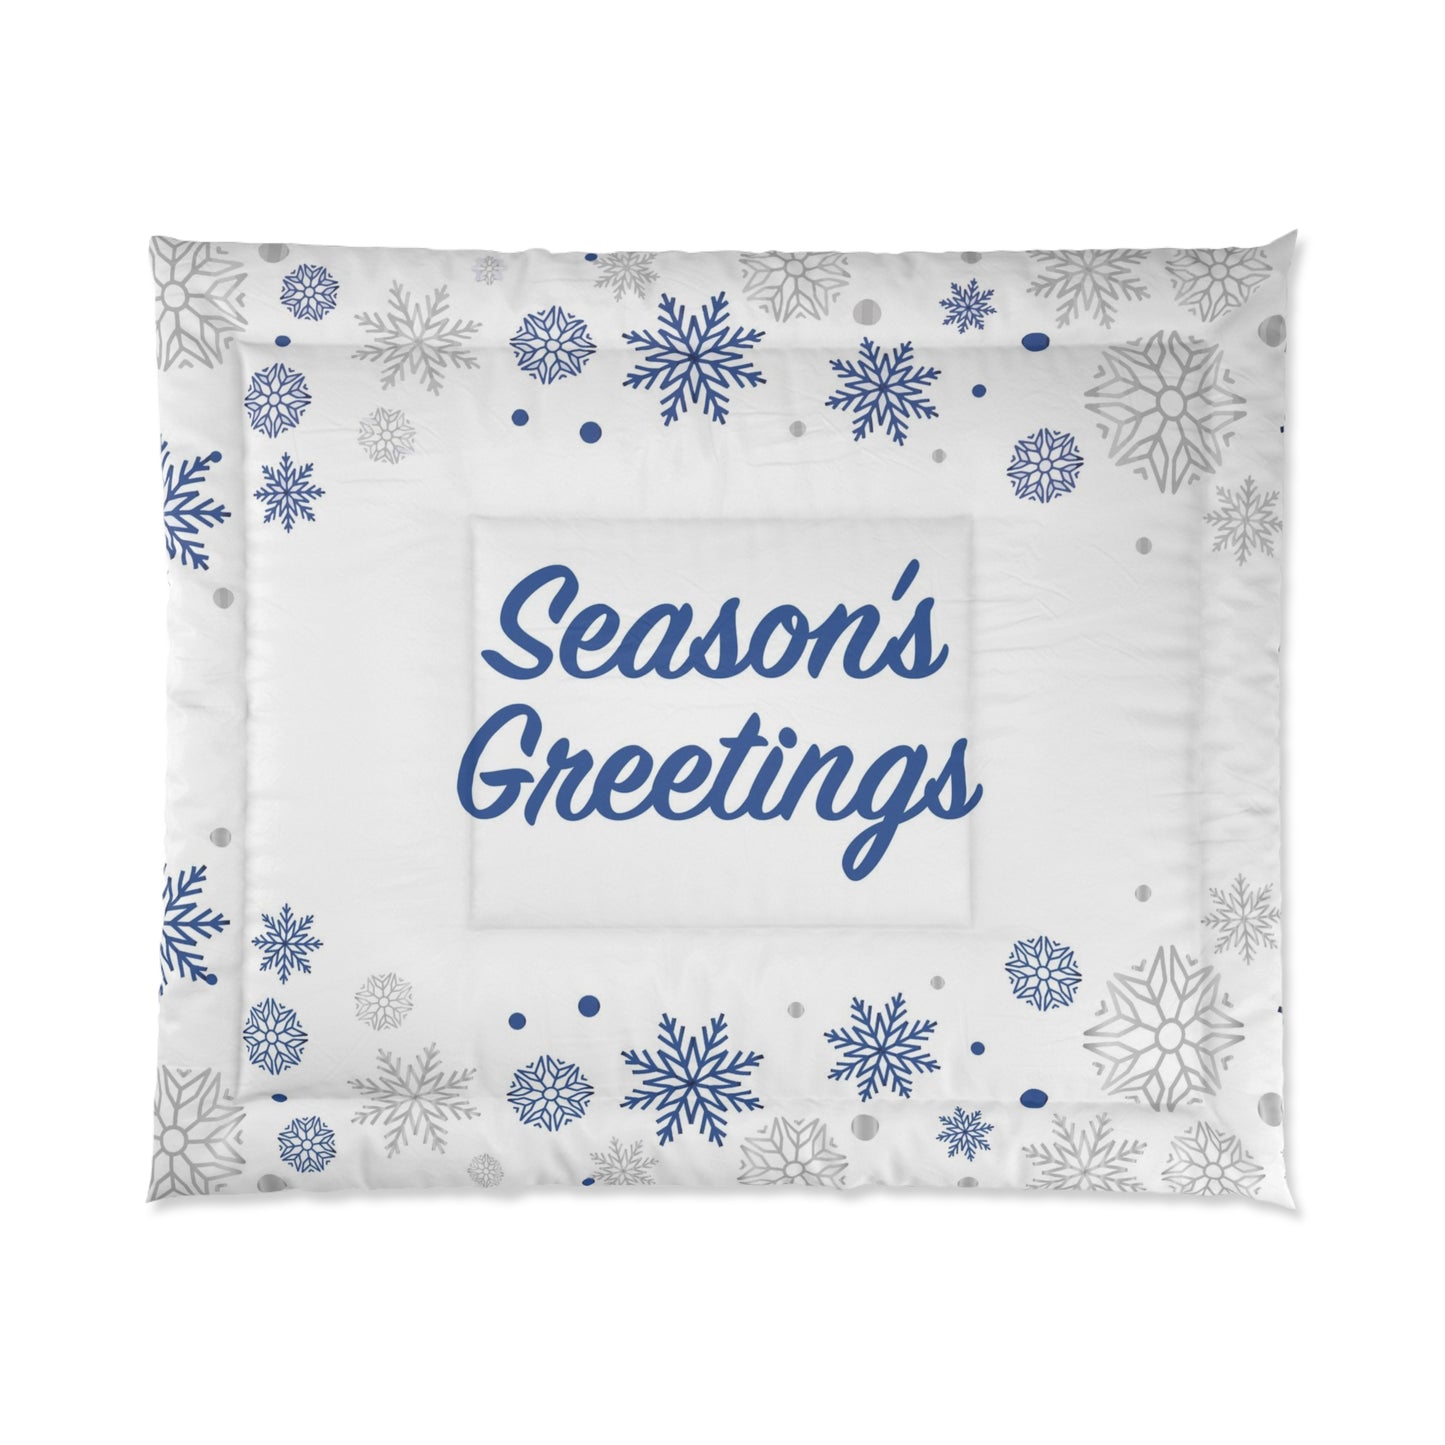 Holiday Comforter, Season's Greetings, White